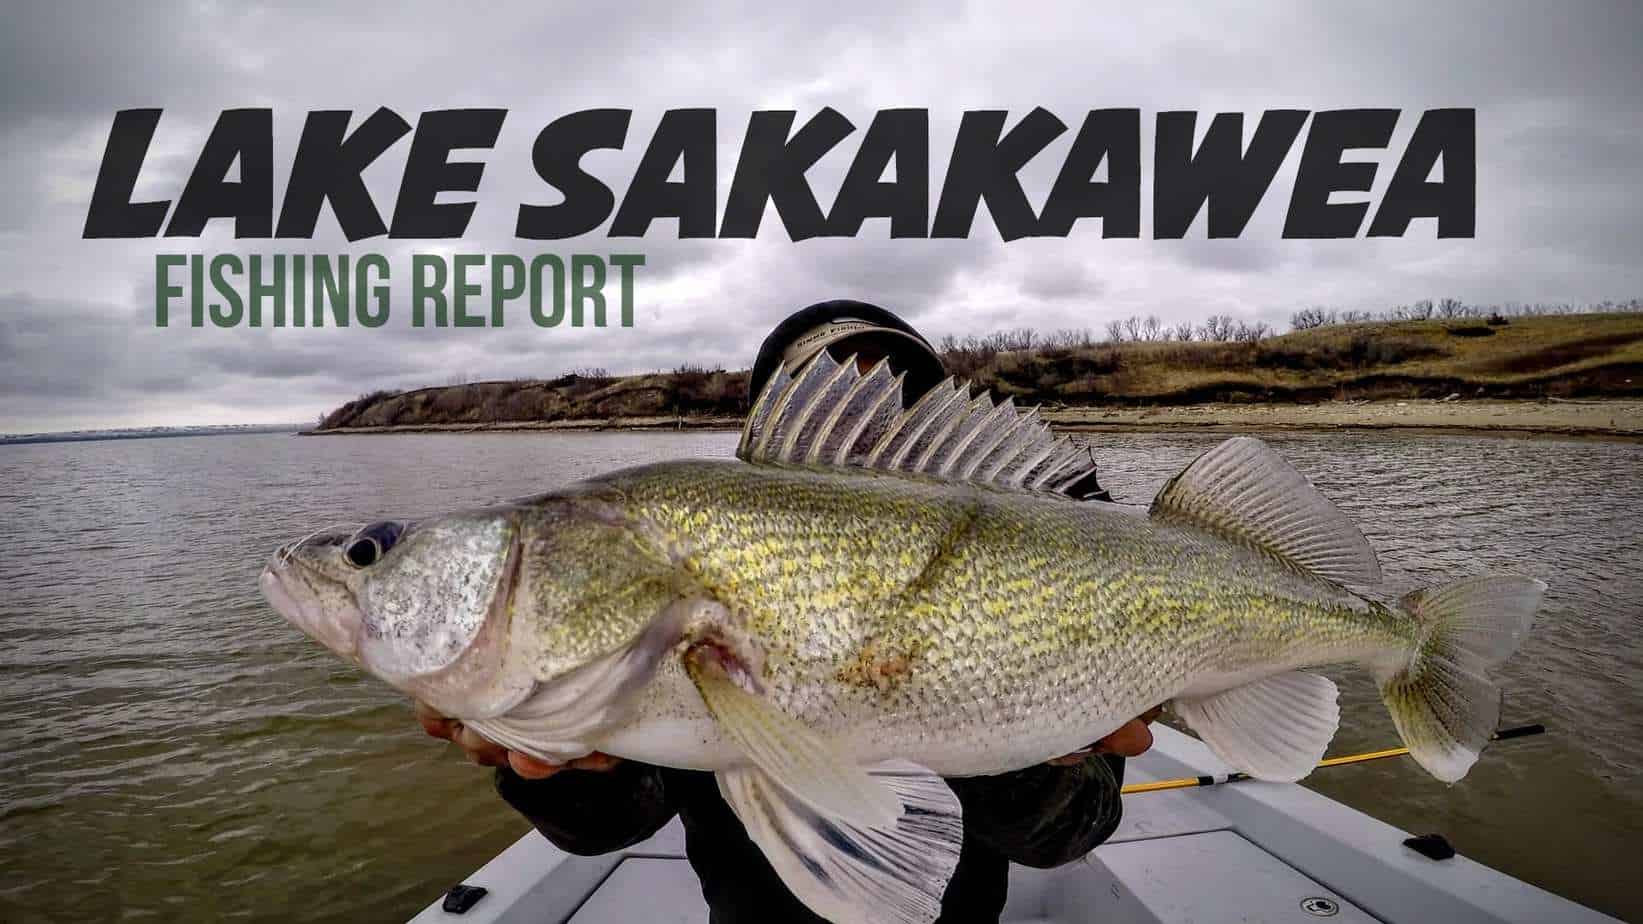 Team Gillespie Wins on Lake Sakakawea With Nearly 35 Pounds